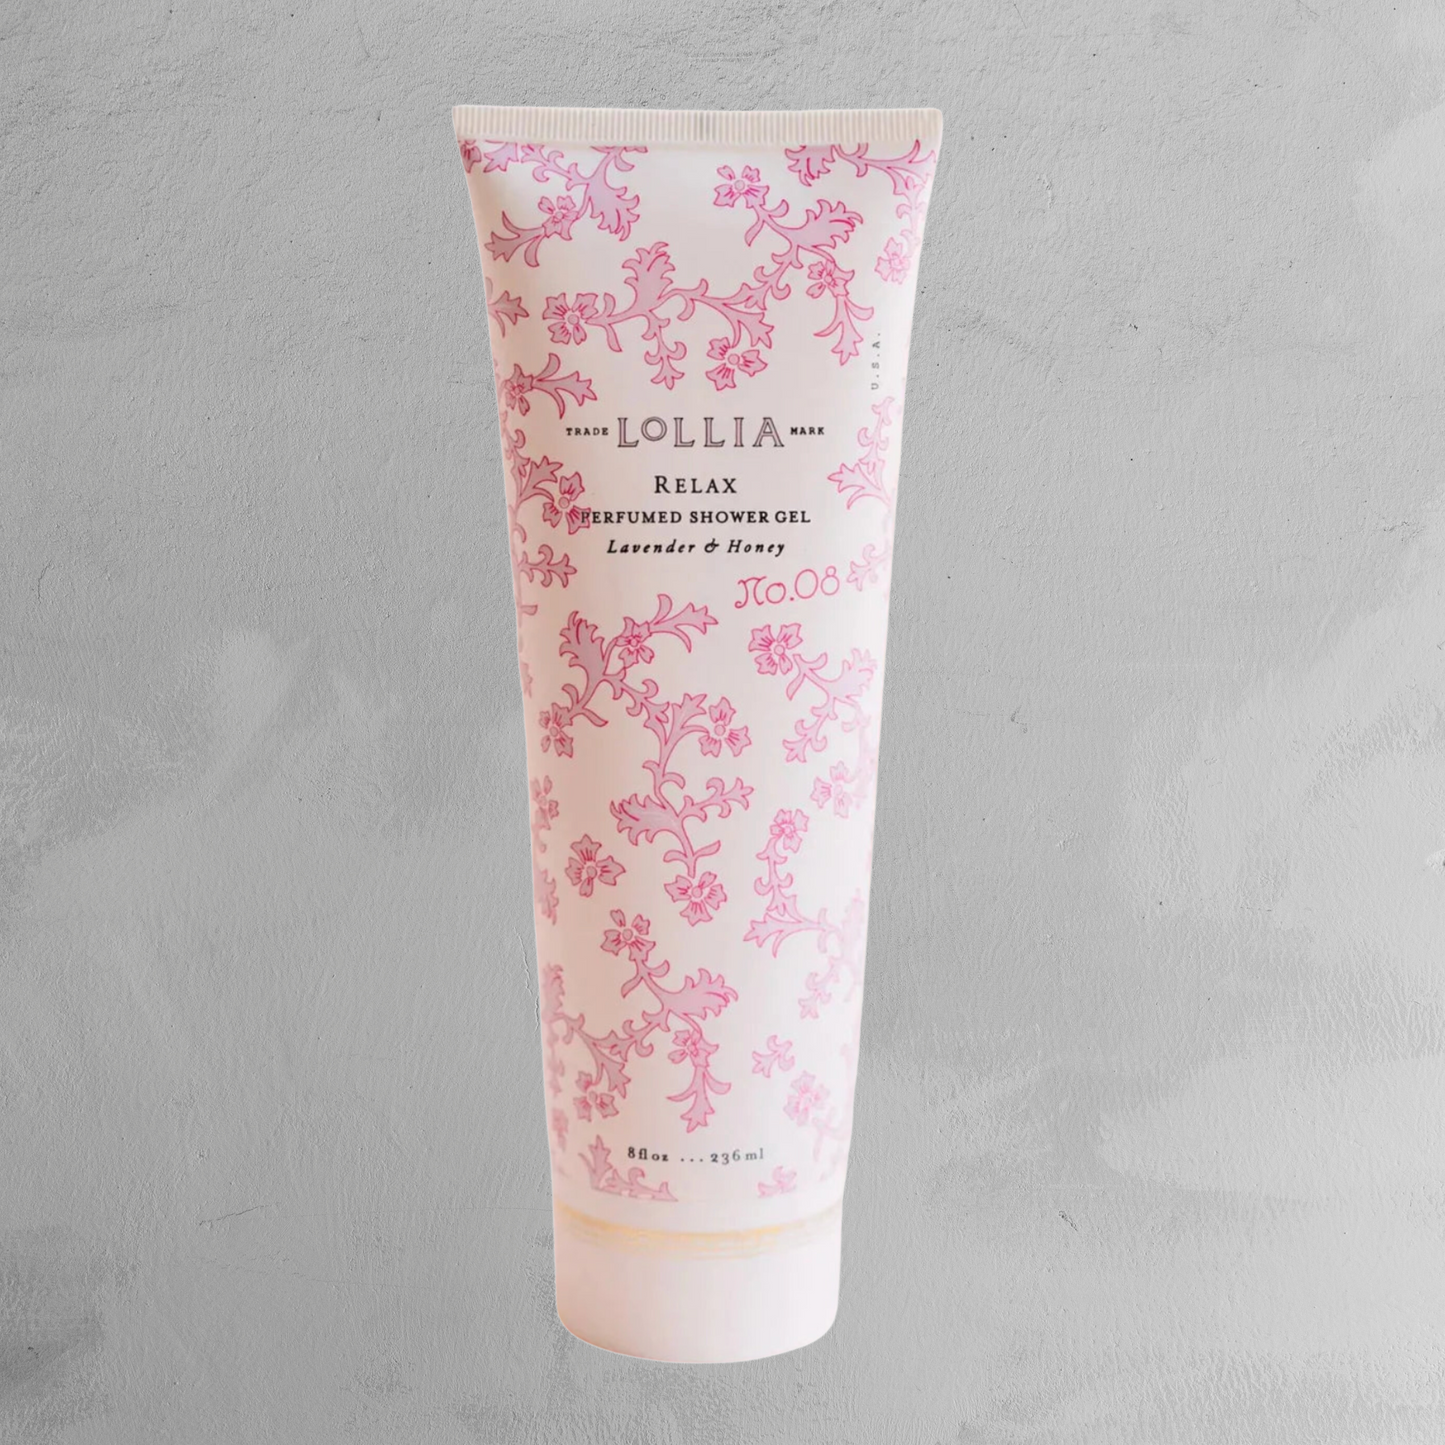 Lollia - Perfumed Shower Gel - Relax